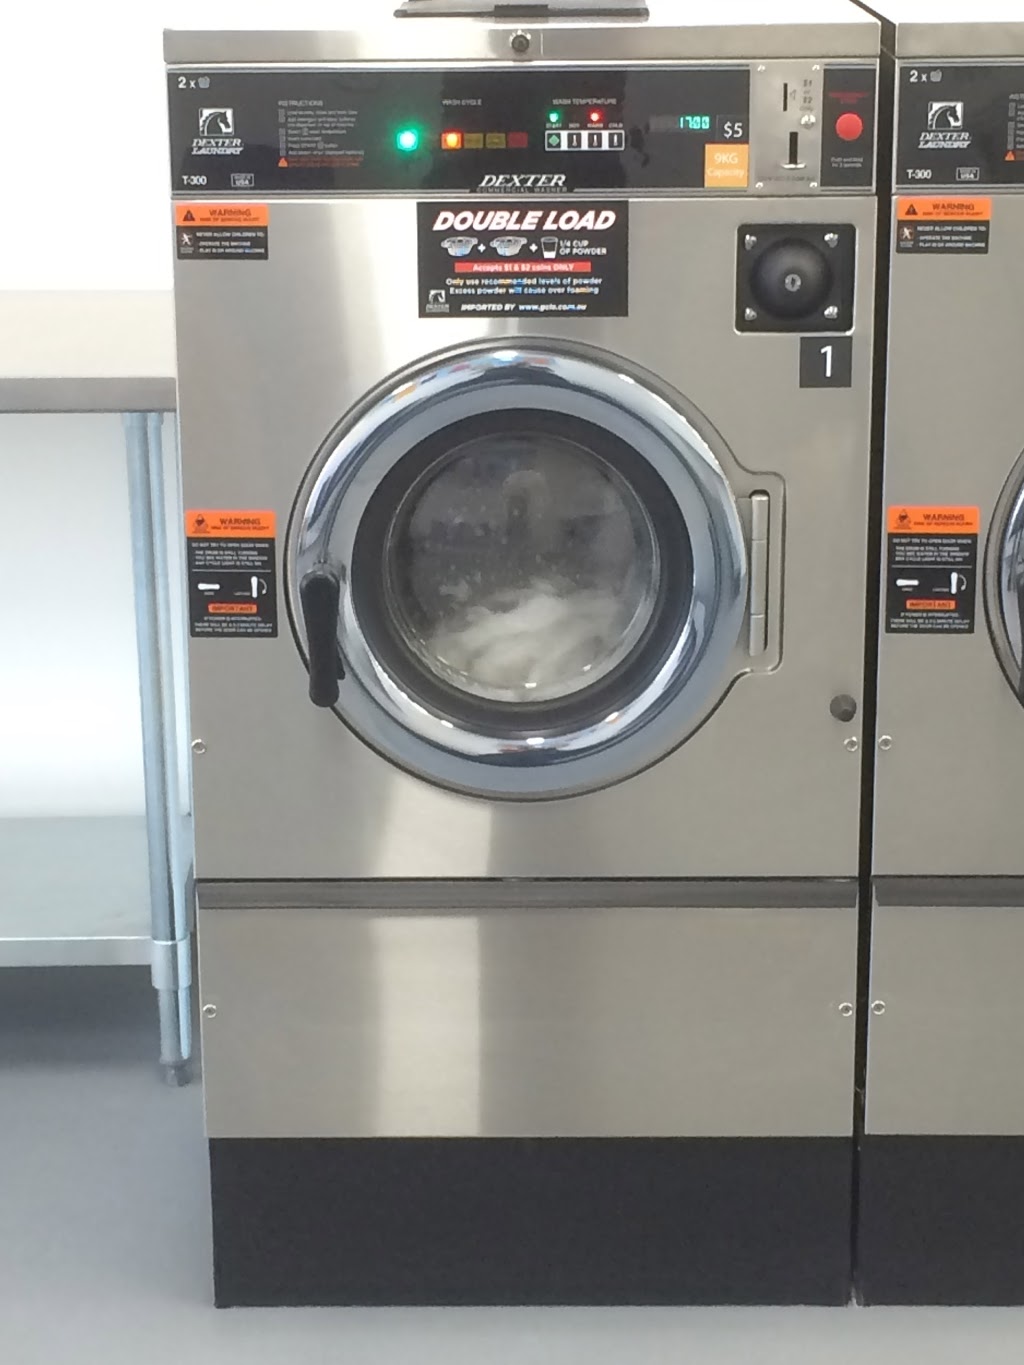 All Round Laundry | laundry | 4/60 Panorama Dr, Melton West VIC 3337, Australia | 0456648692 OR +61 456 648 692